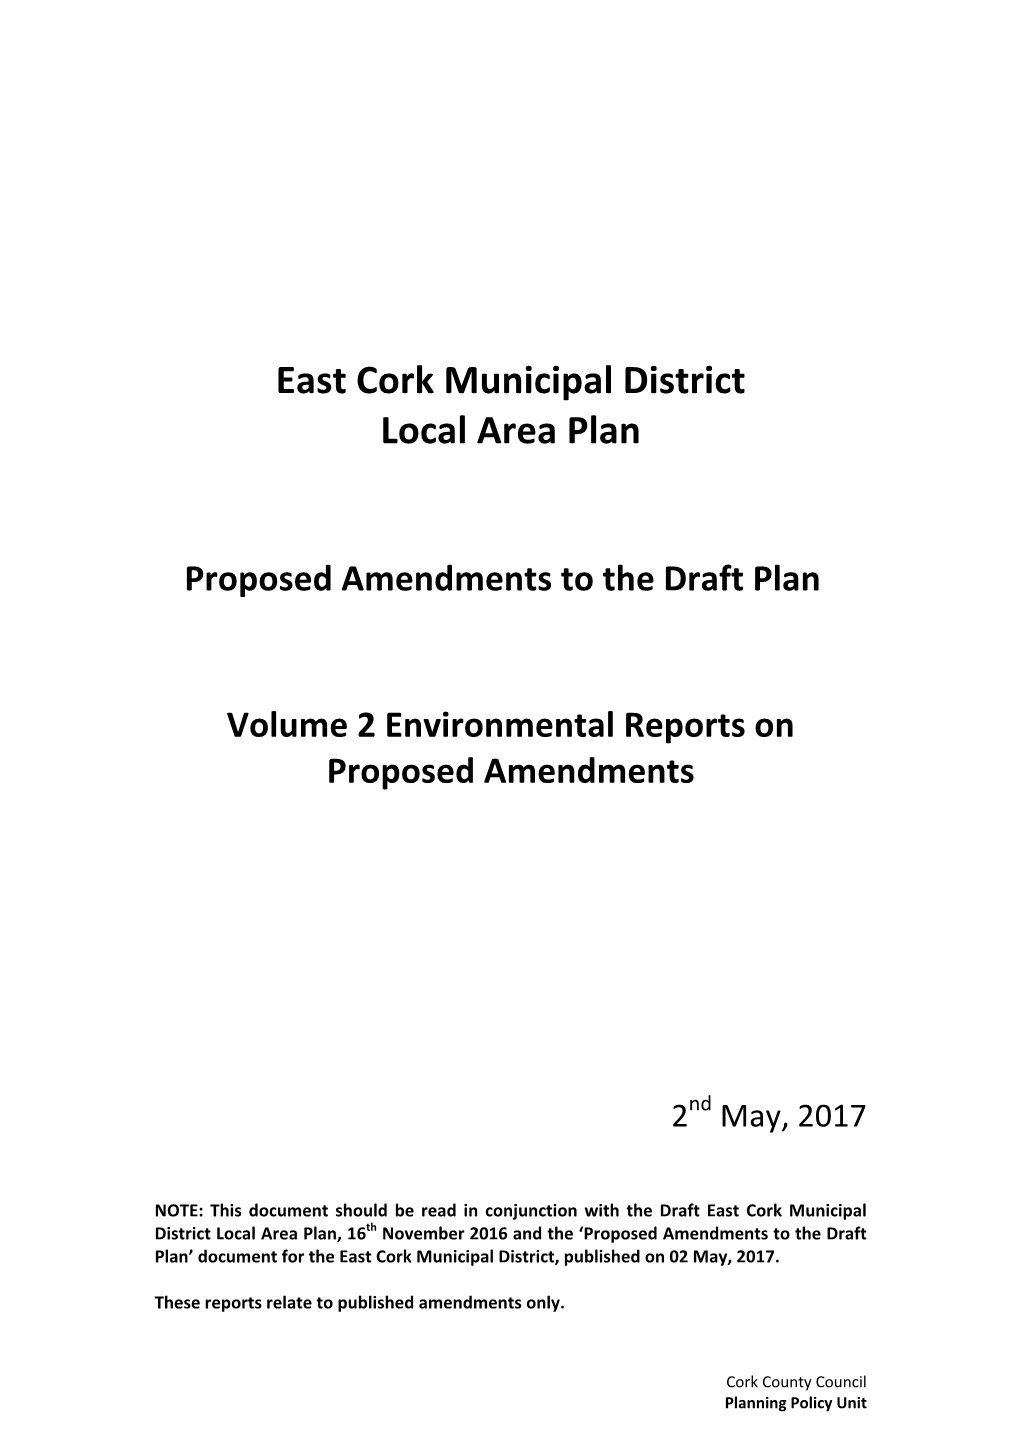 East Cork Municipal District Local Area Plan